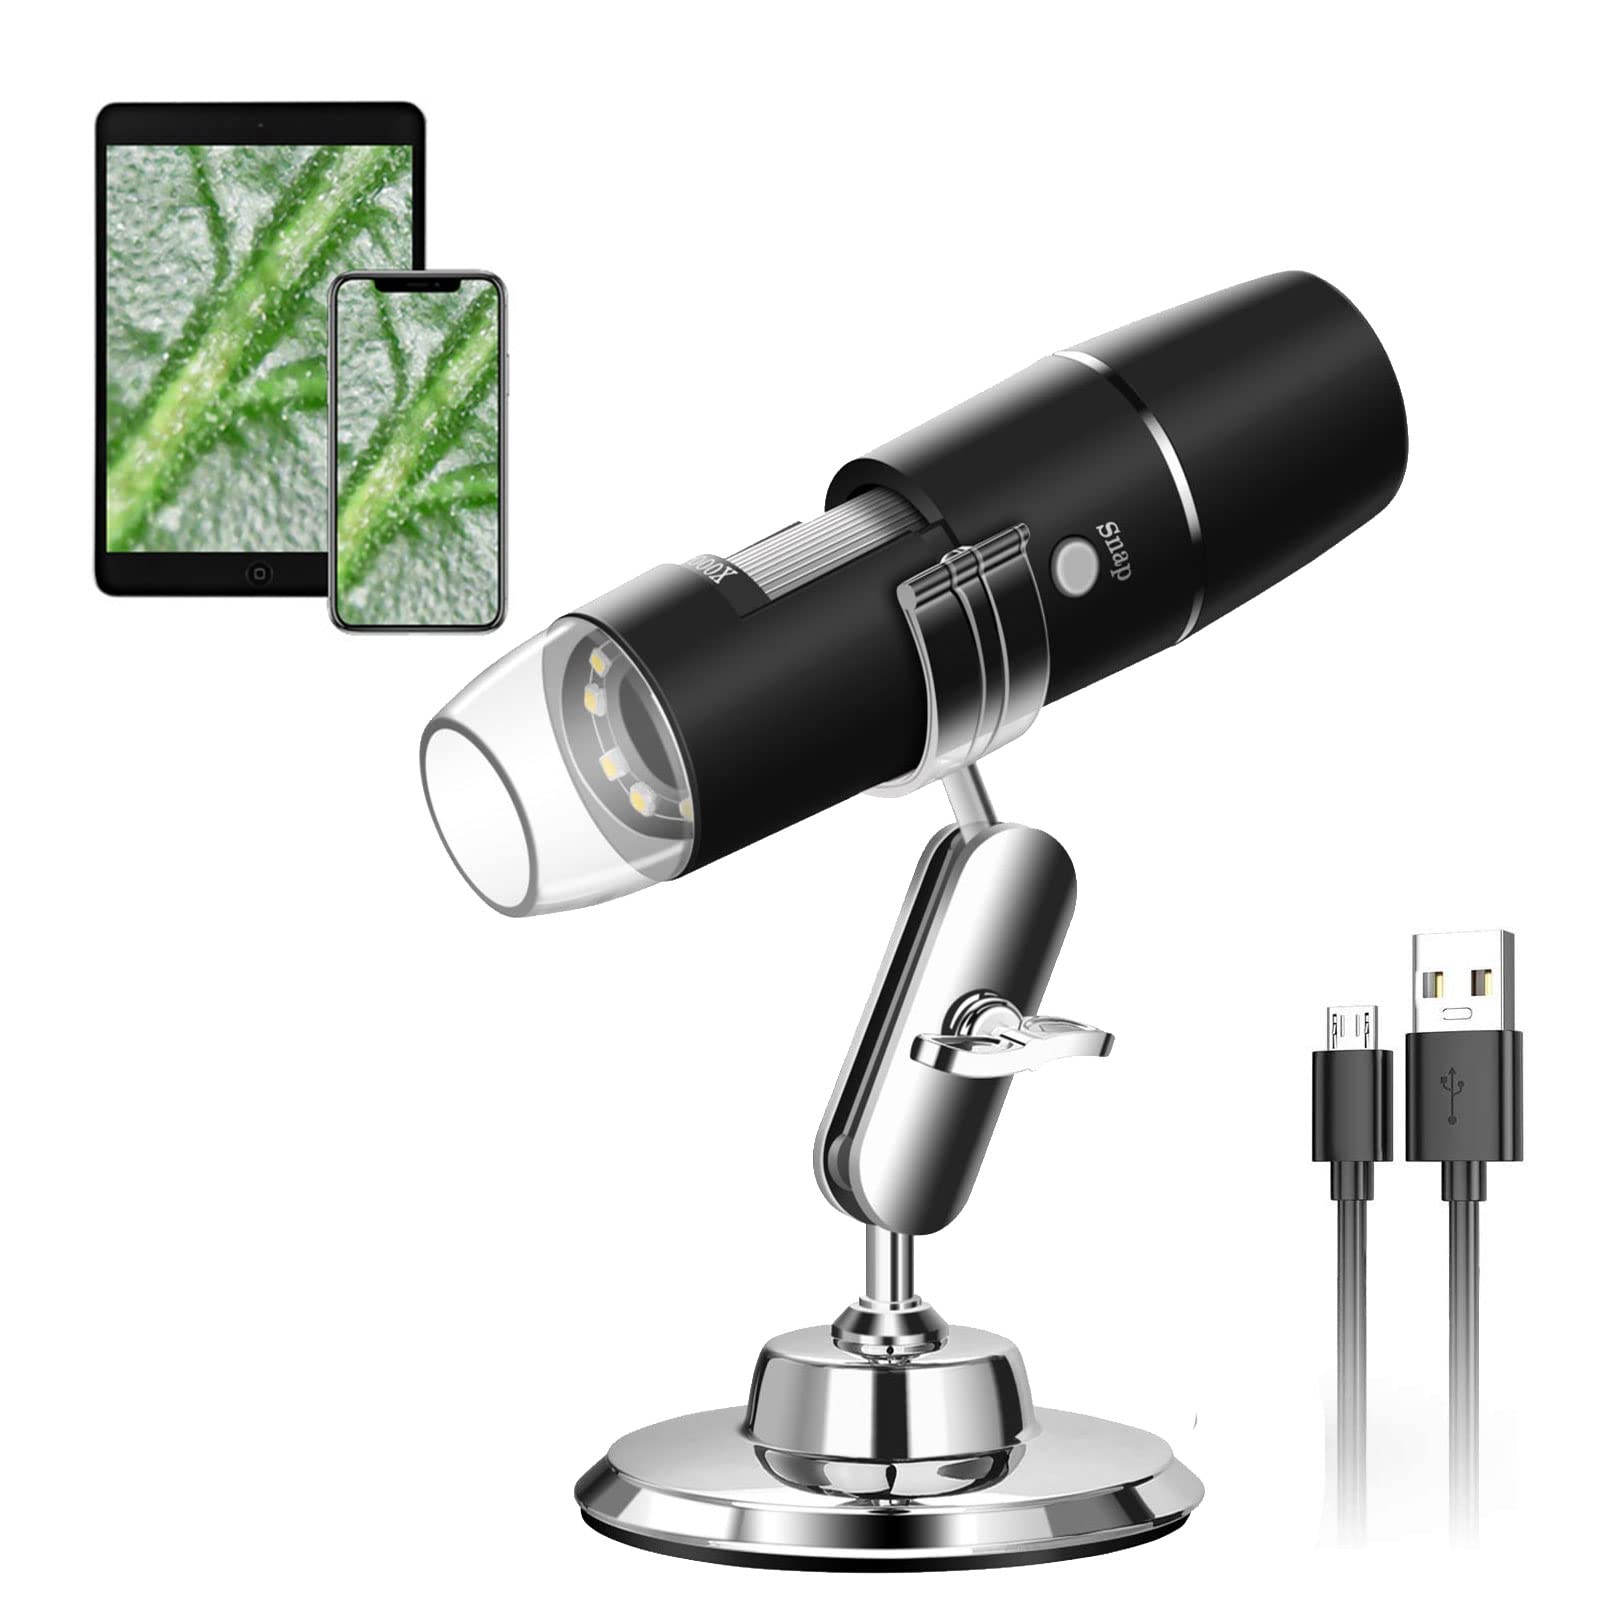 WADEO Digitales USB-Mikroskop, Tragbares WiFi-Mikroskop 50X-1000X Vergrößerung mit Endoskopie und 8 LED, Digitales Mikroskop für Android, iOS, Windows